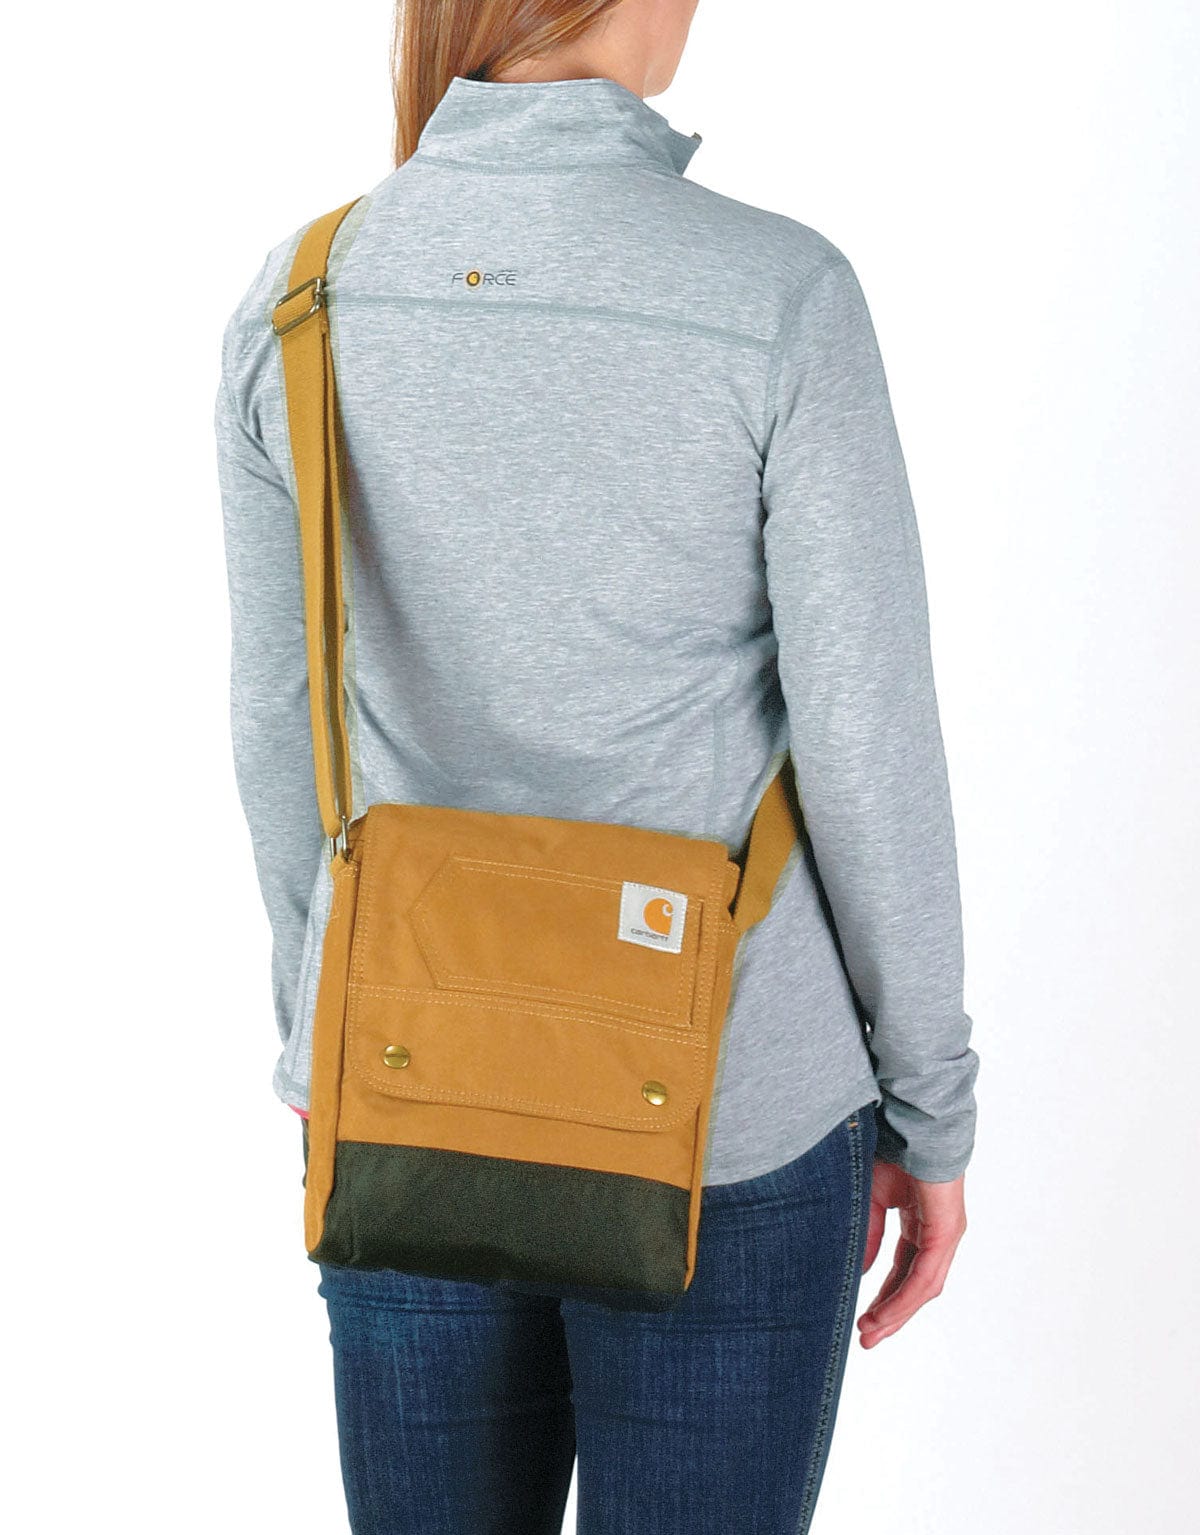  Carhartt, Durable, Adjustable Crossbody Bag with Flap